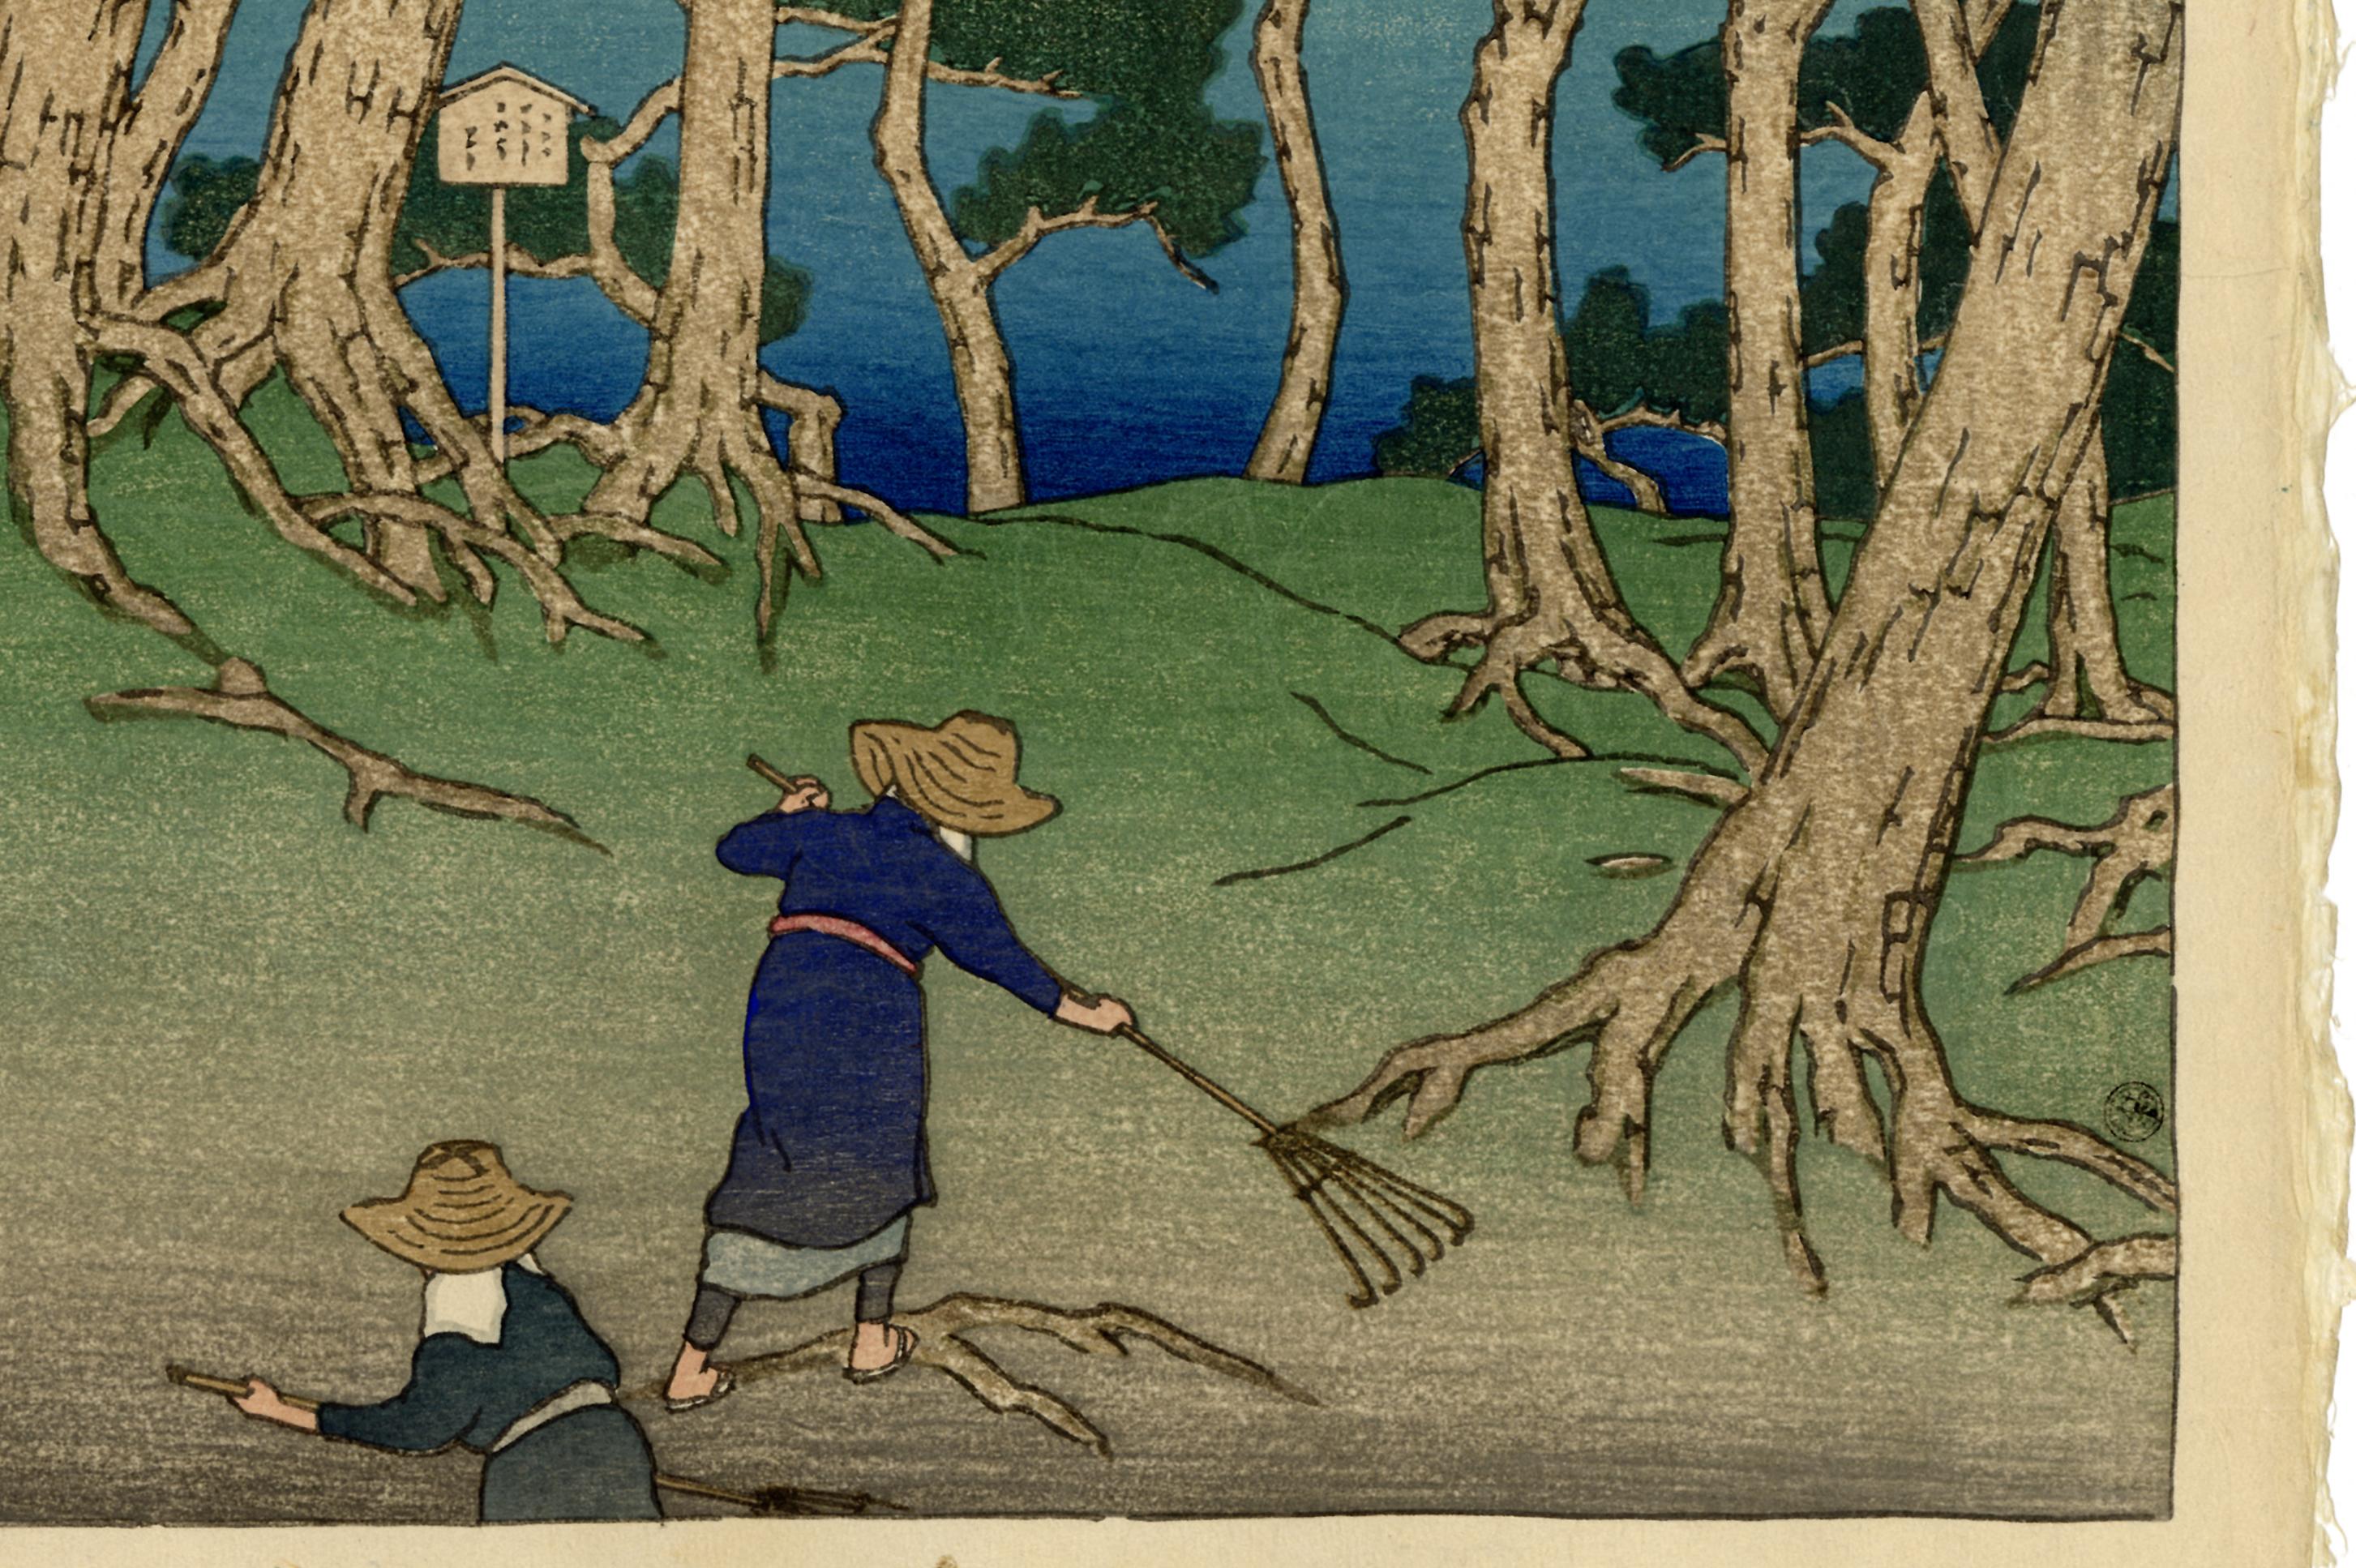 Katsura Island, Matsushima from Souvenirs of Travels, First Series - Showa Print by Kawase Hasui